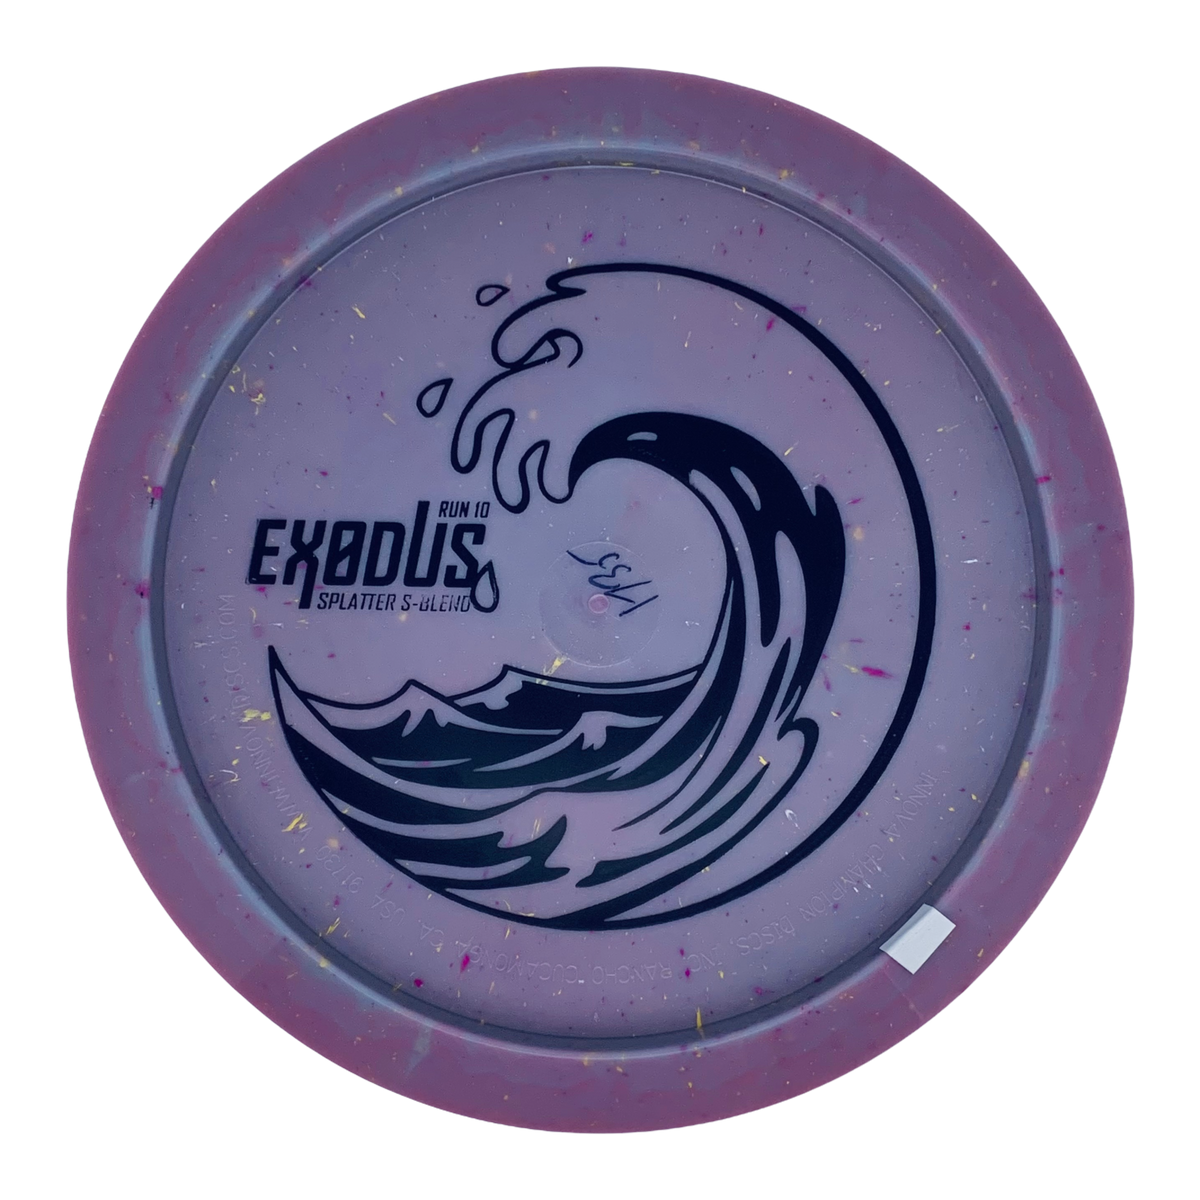 Infinite Discs Splatter S-Blend Exodus